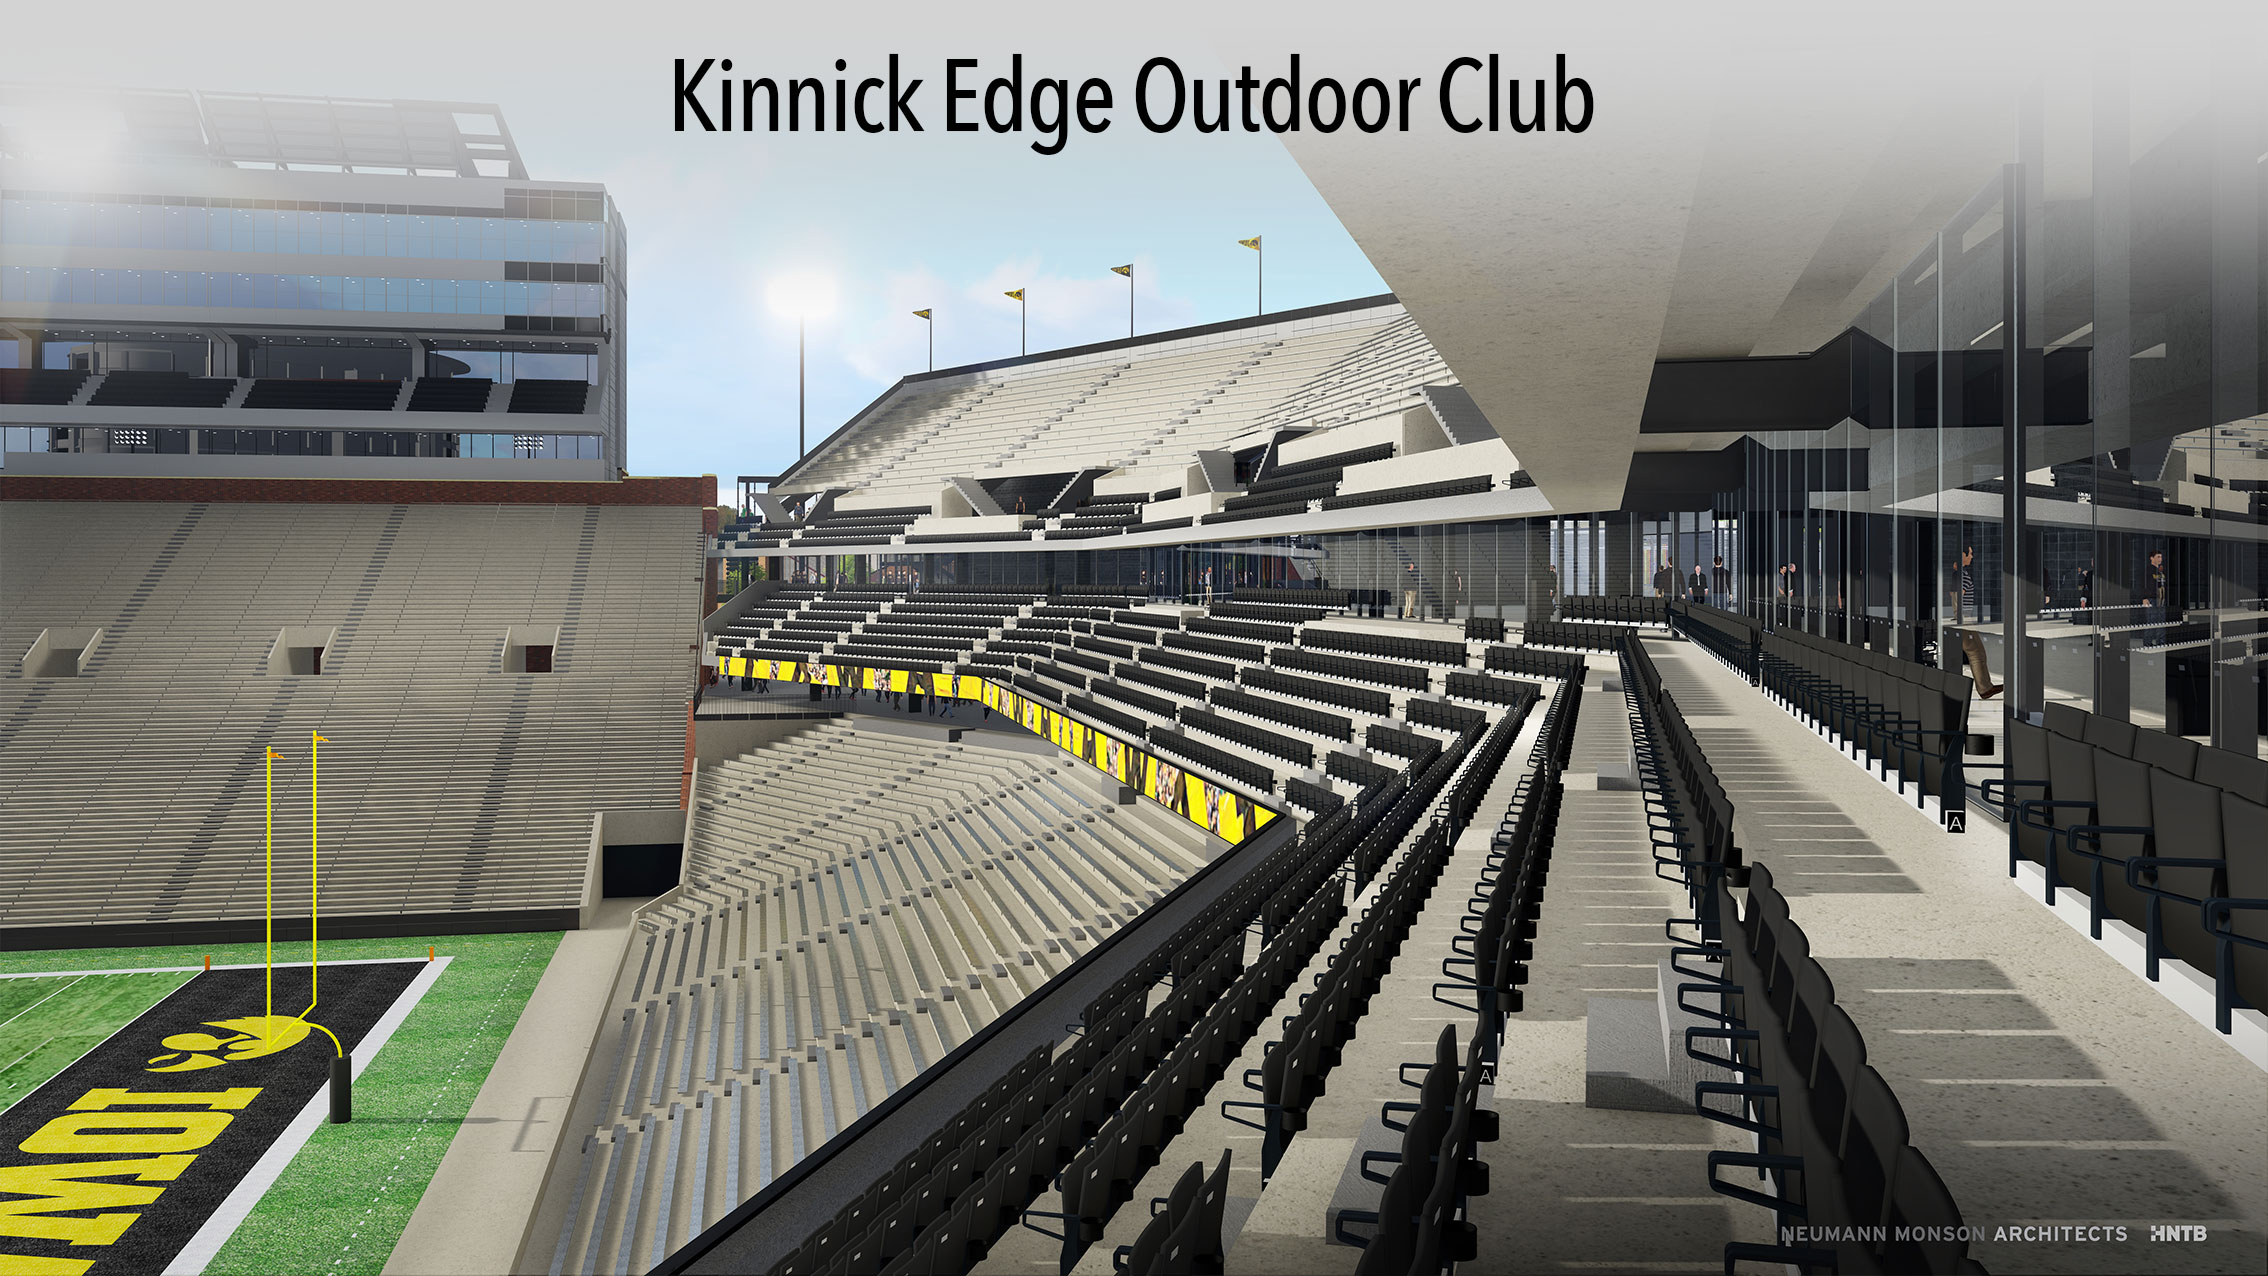 Kinnick Edge Outdoor Club Seating Chart